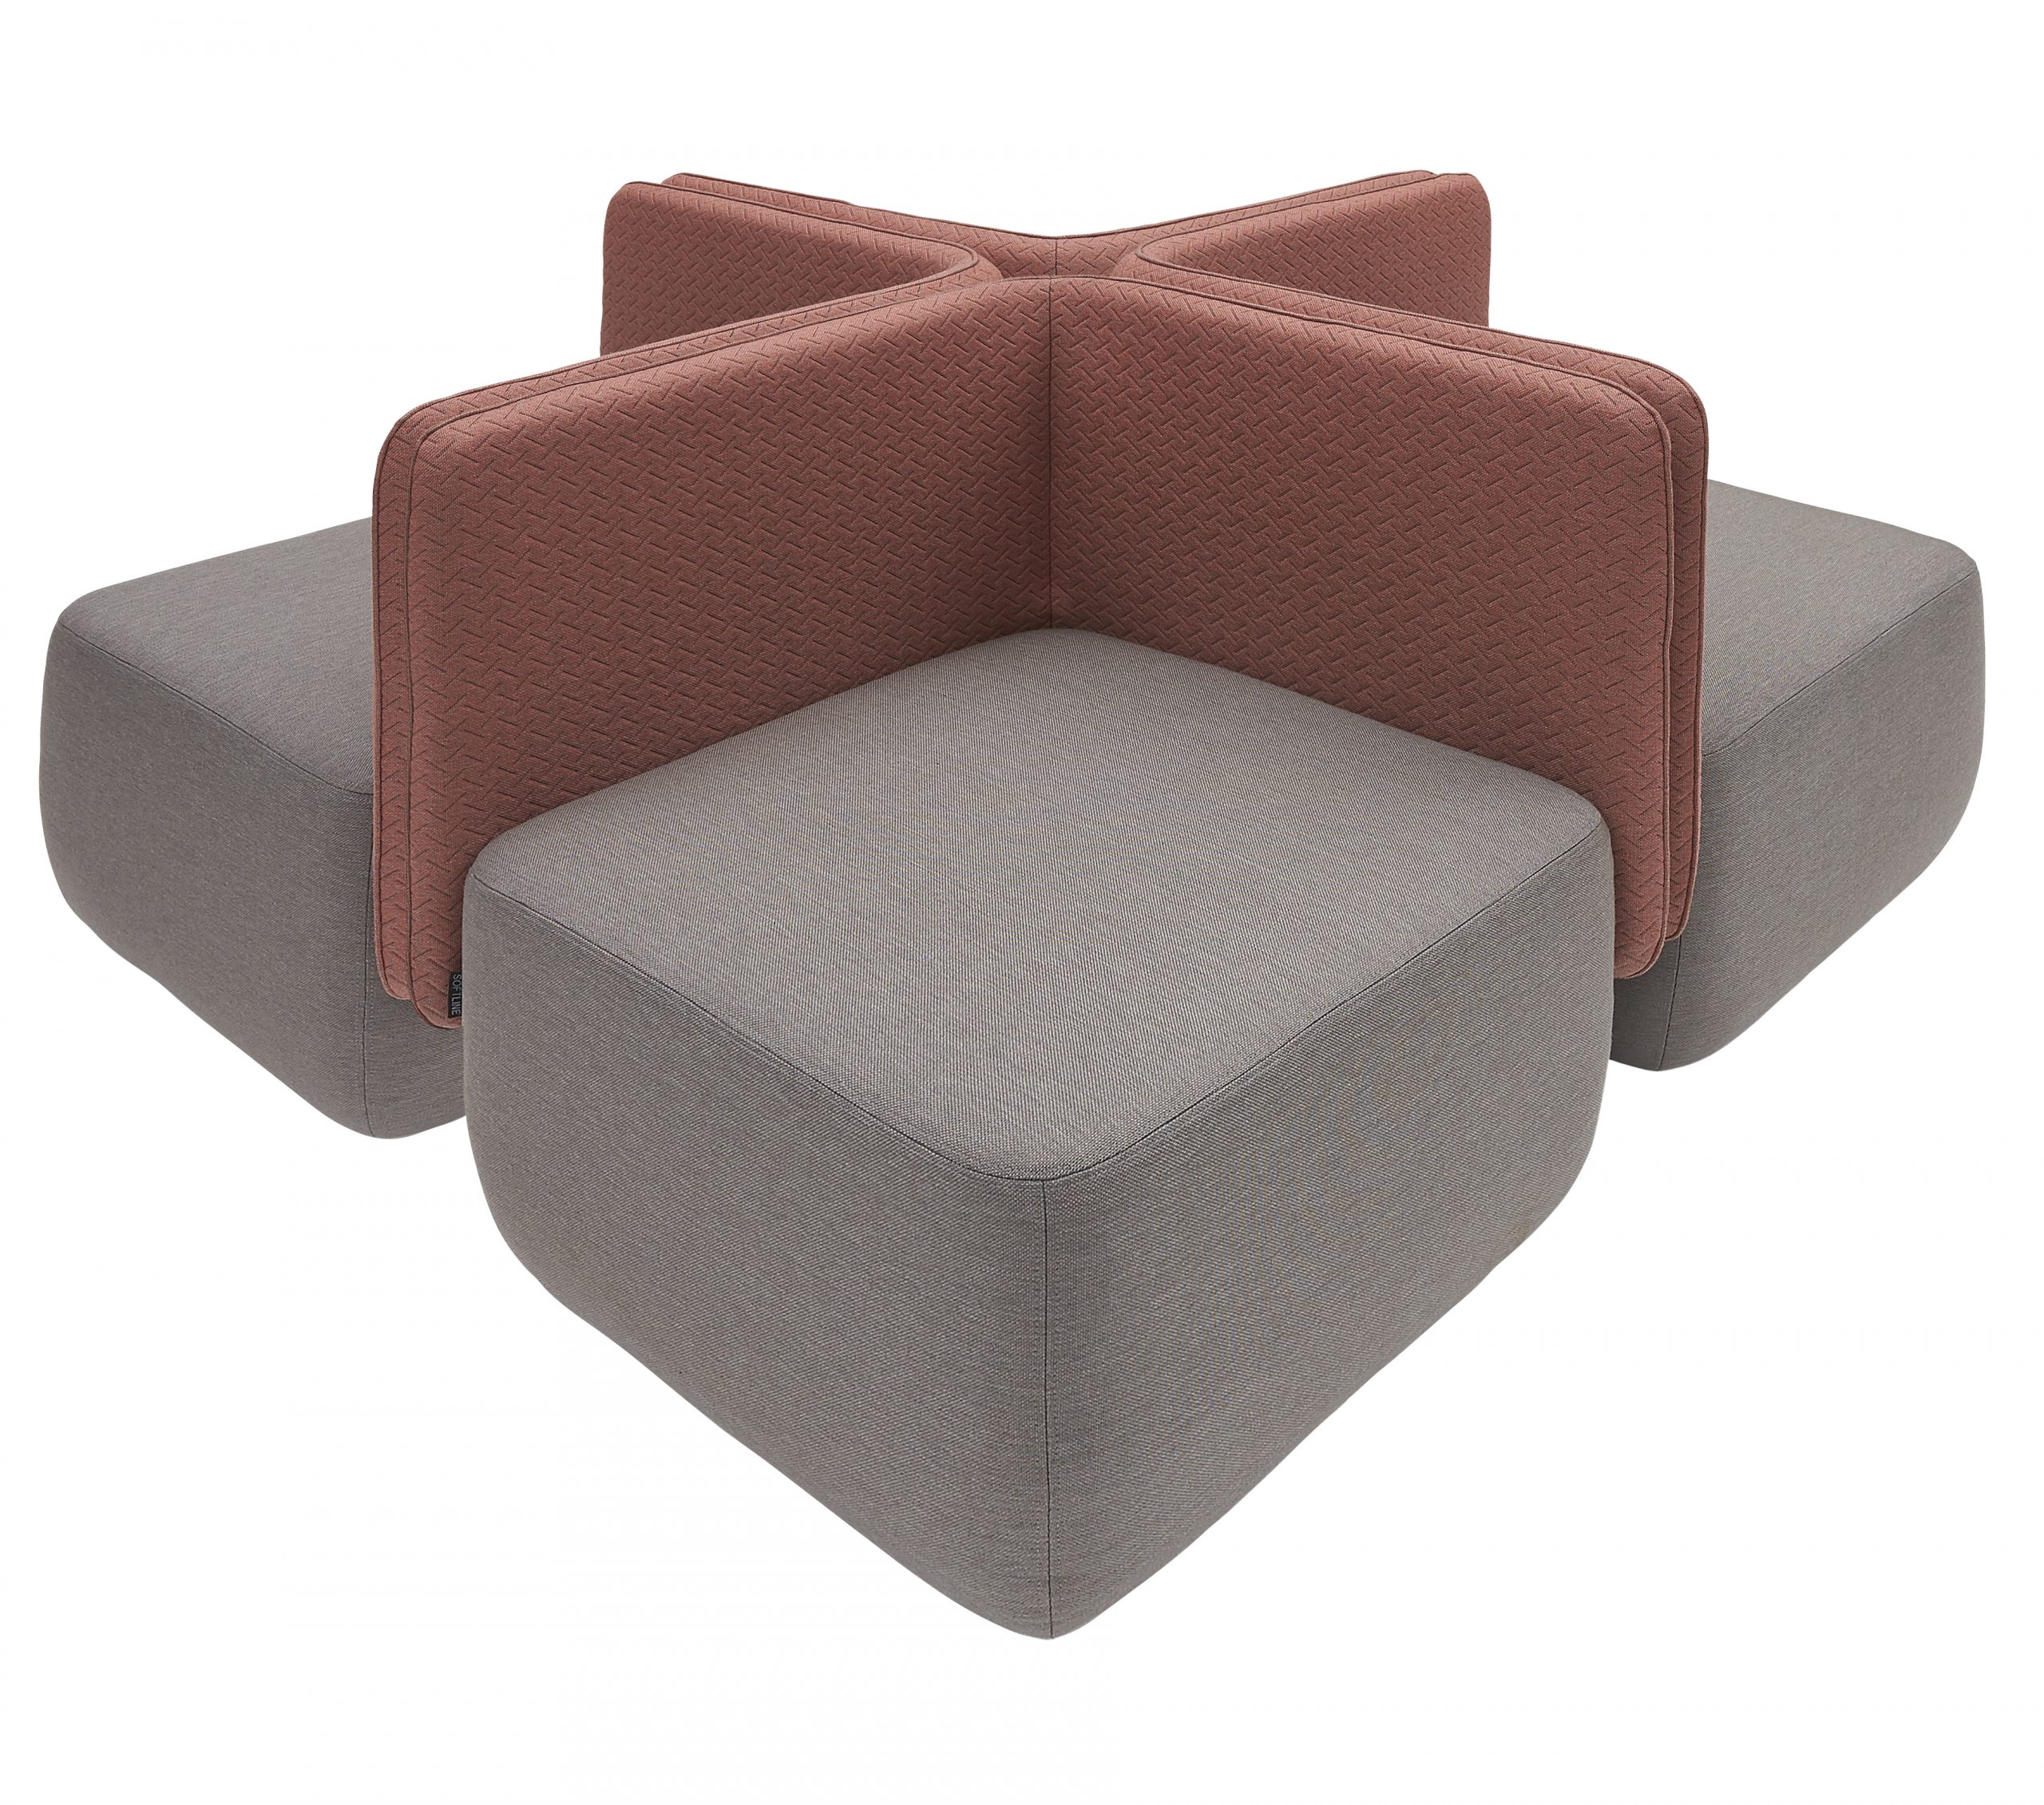 opera-modular-sofa-high-res-35-scaled.jpg